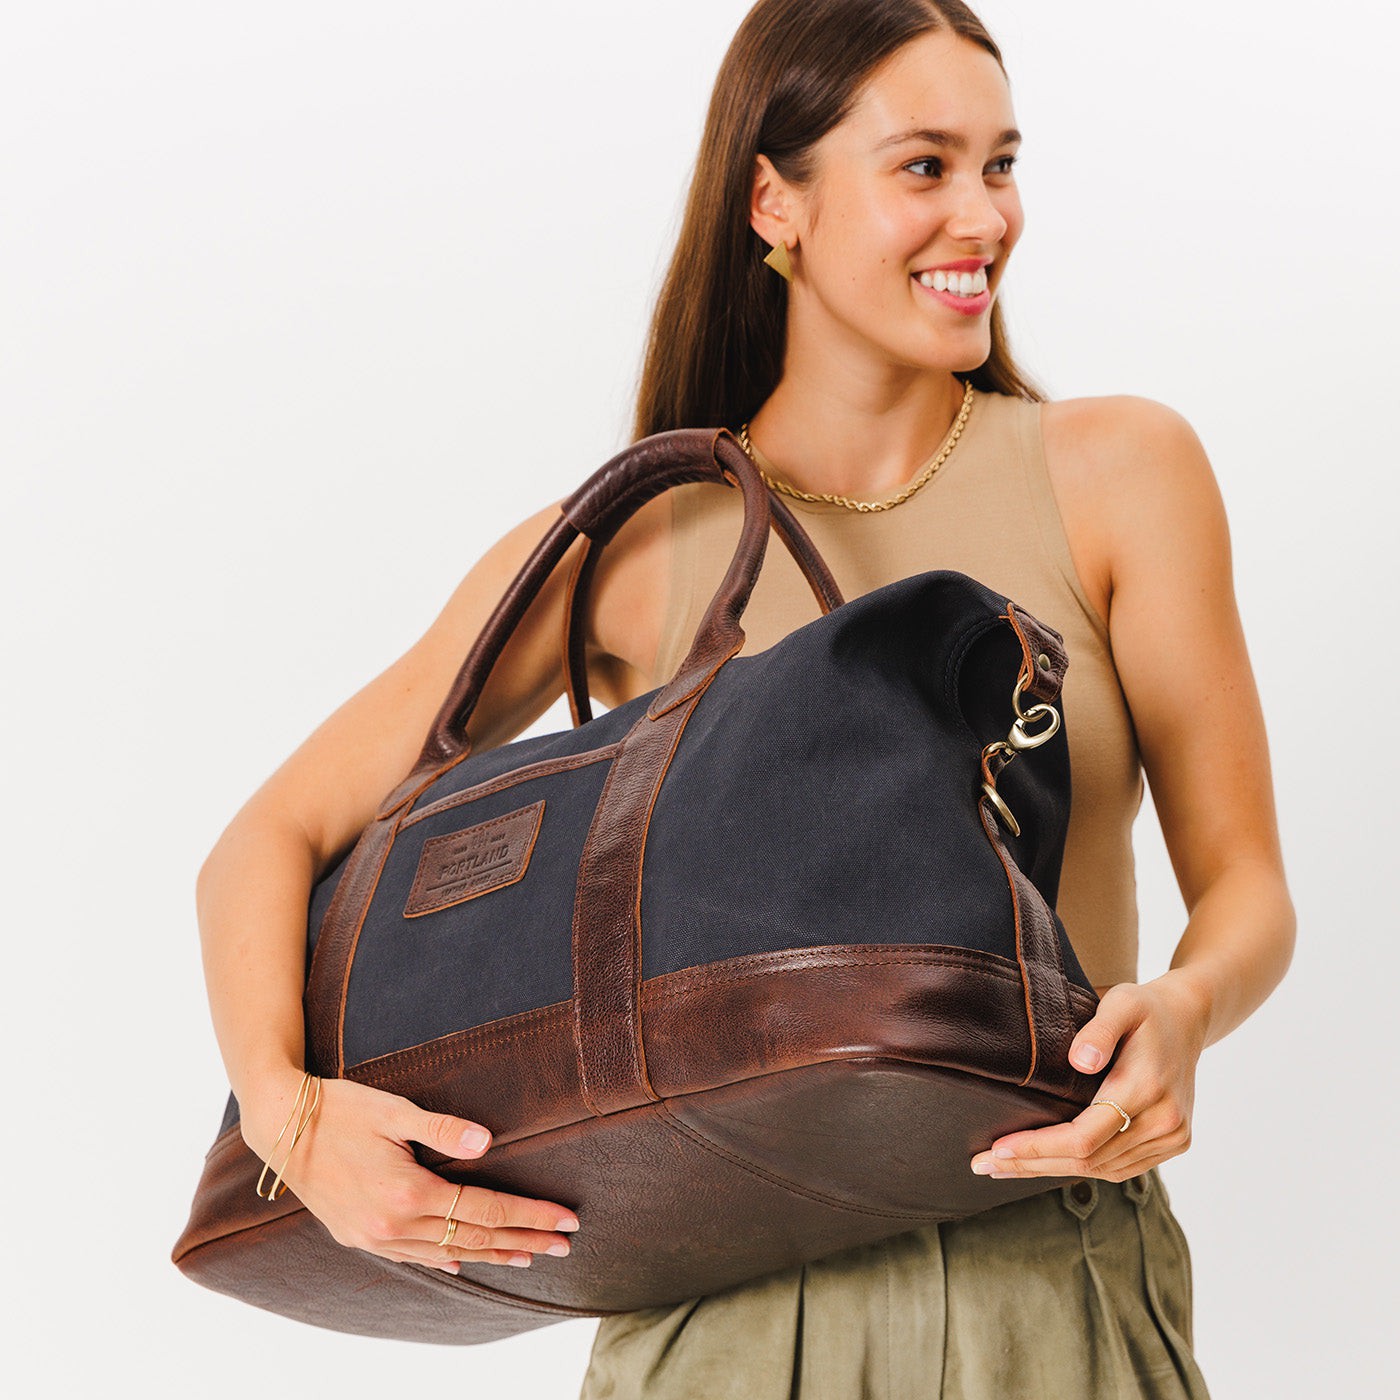 EVVE Women's Small Classic Top Handle Satchel Bag